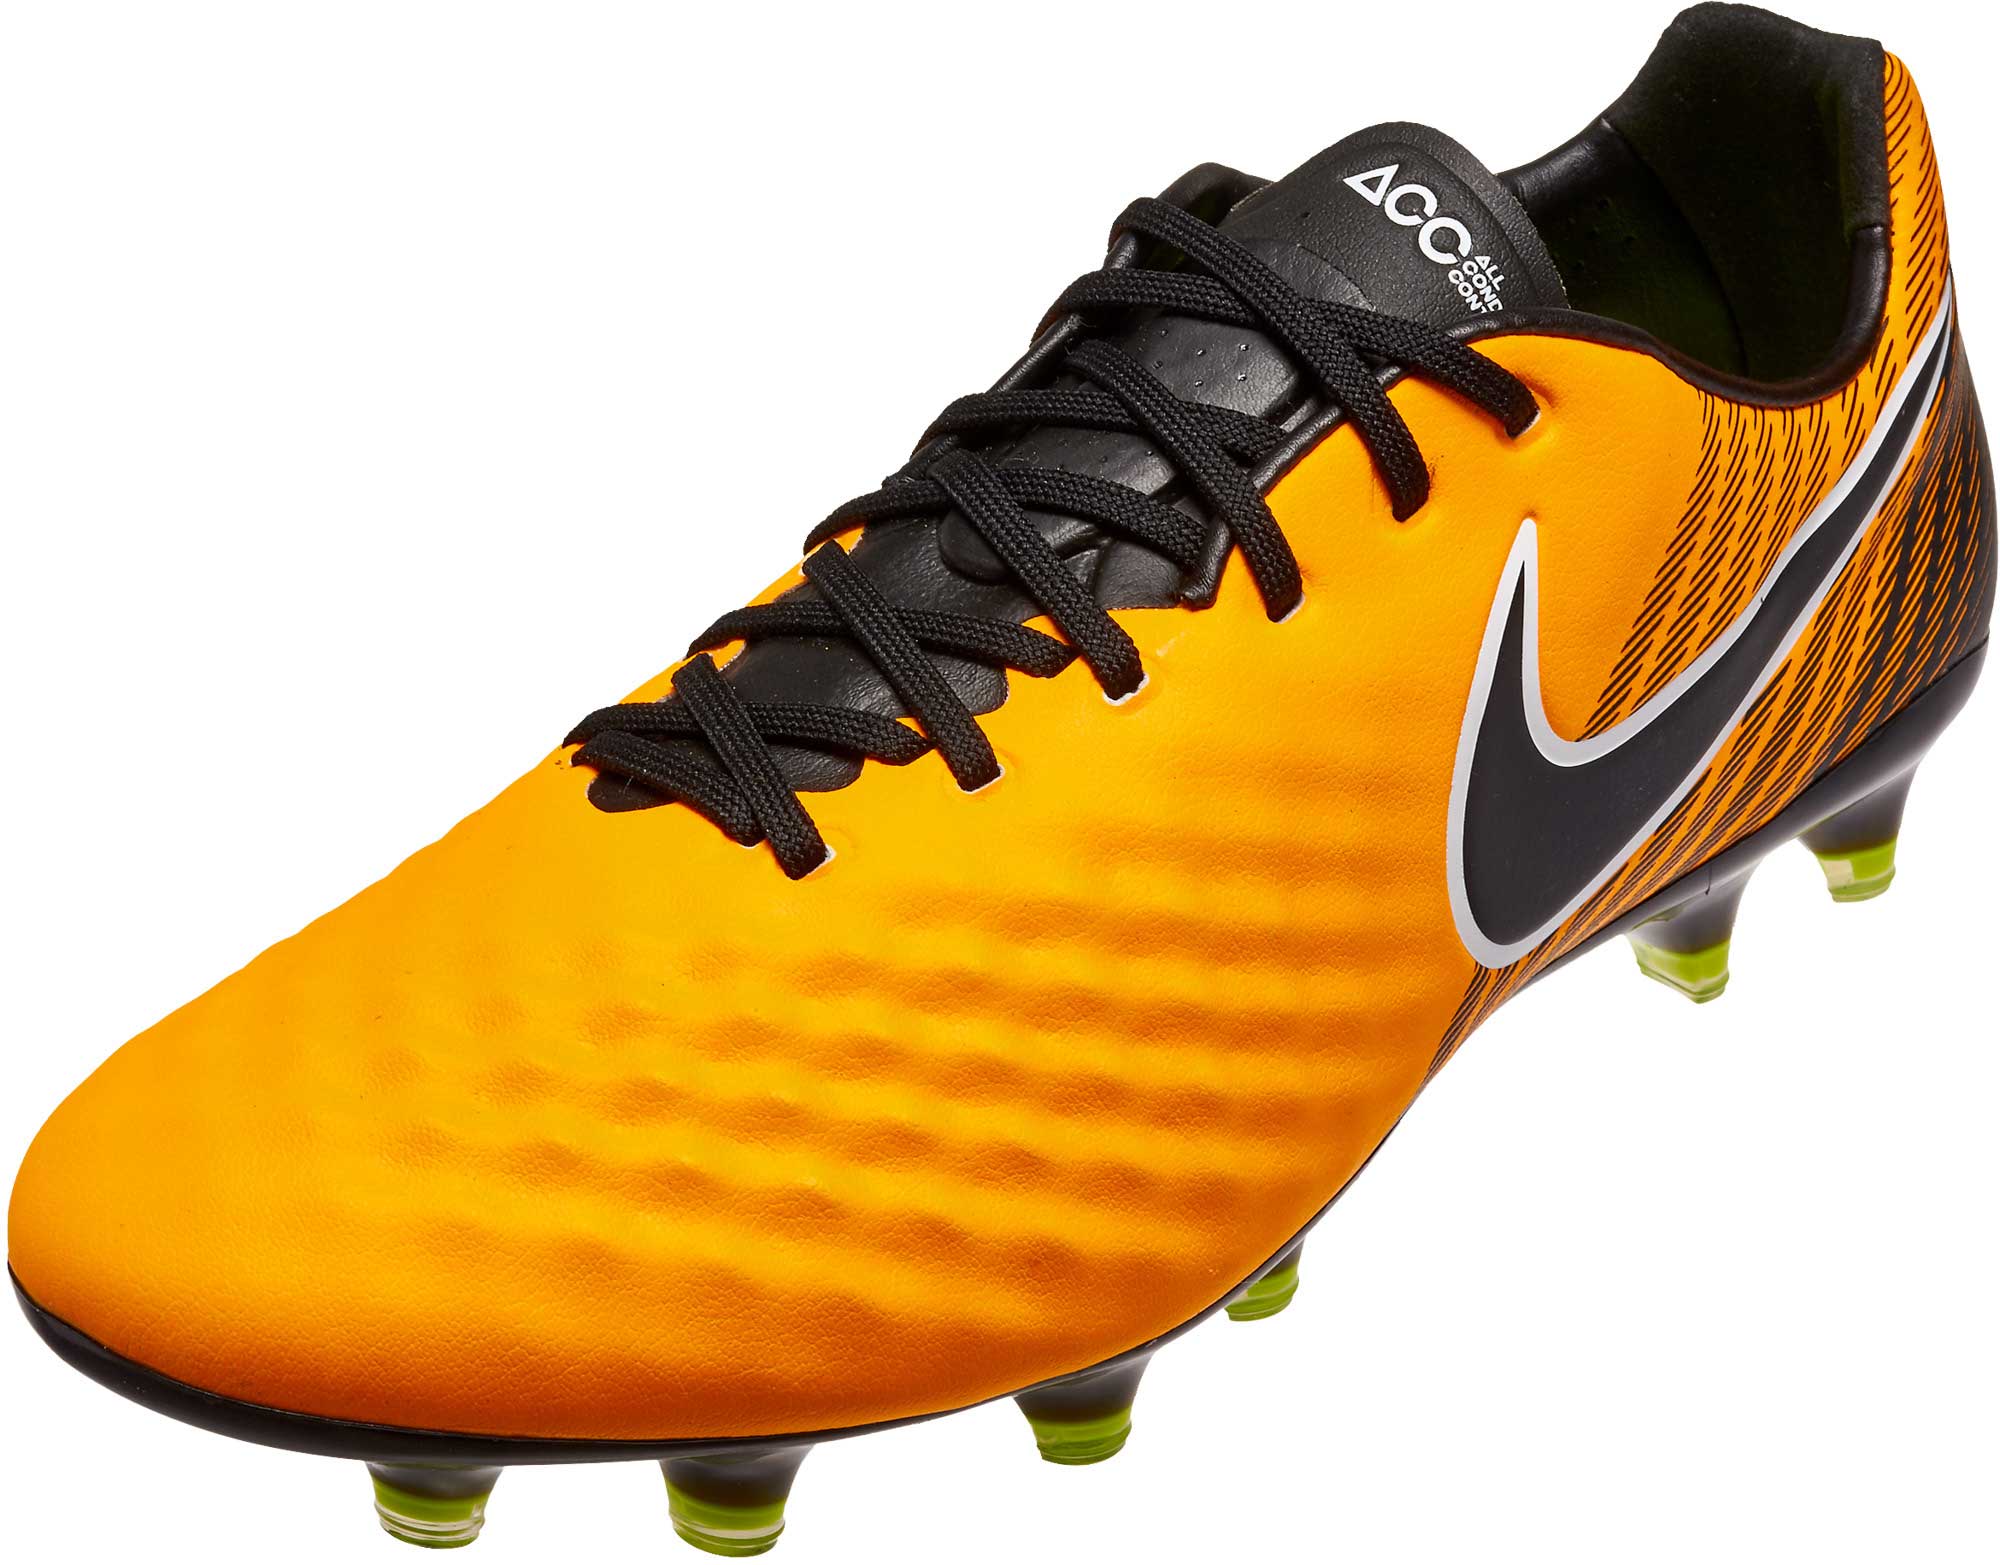 Nike Magista Opus II - Orange Magista Soccer Cleats